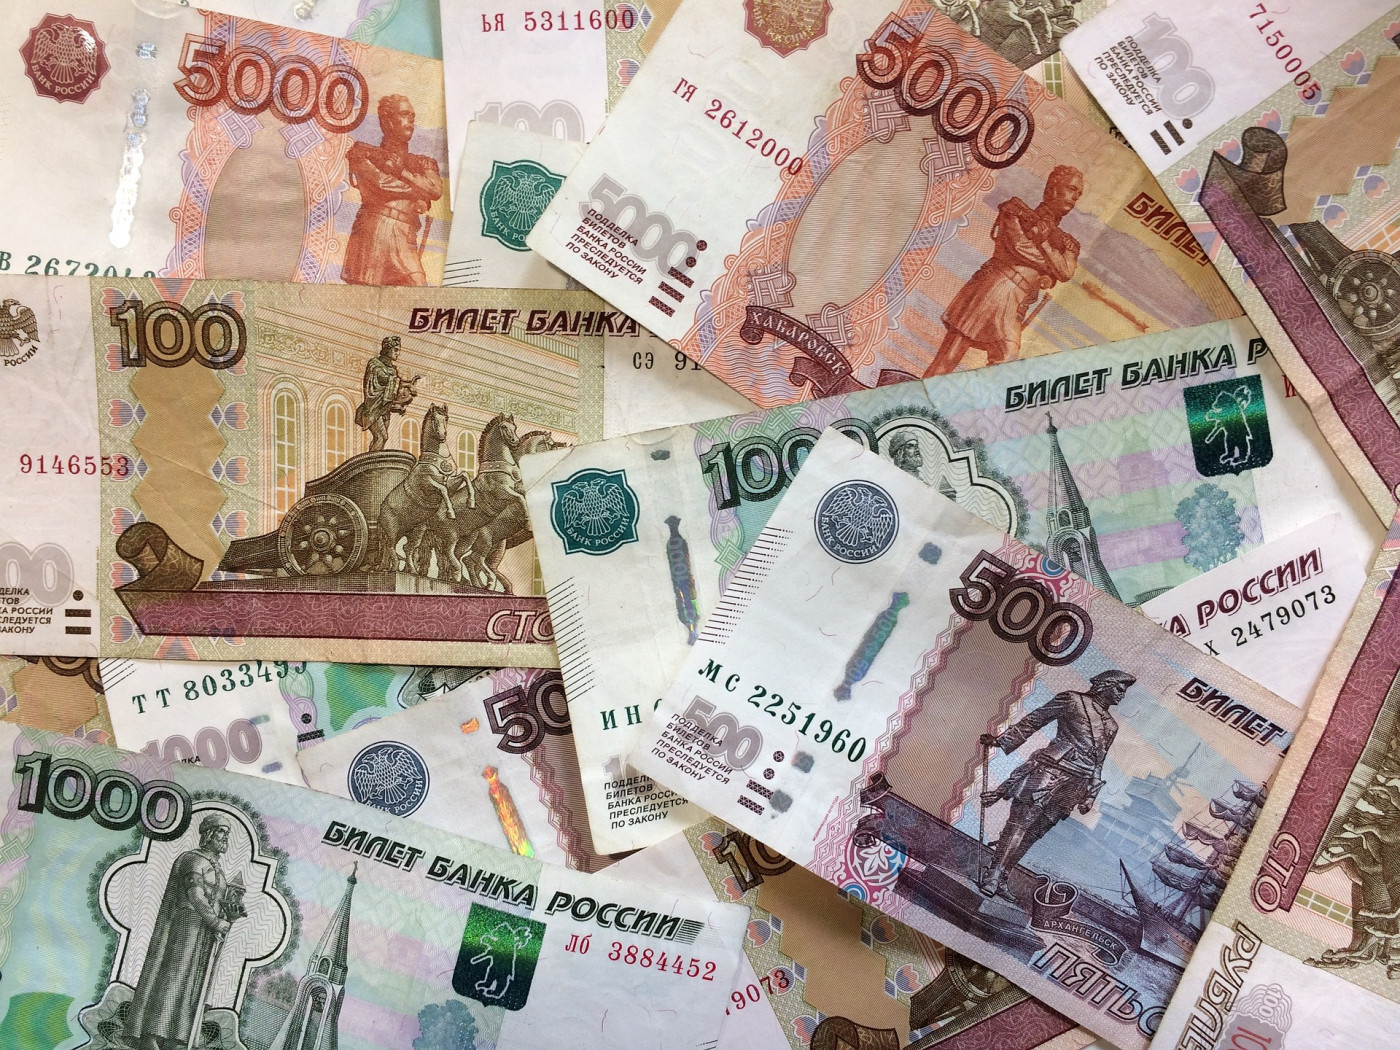 Notas de rublos russos